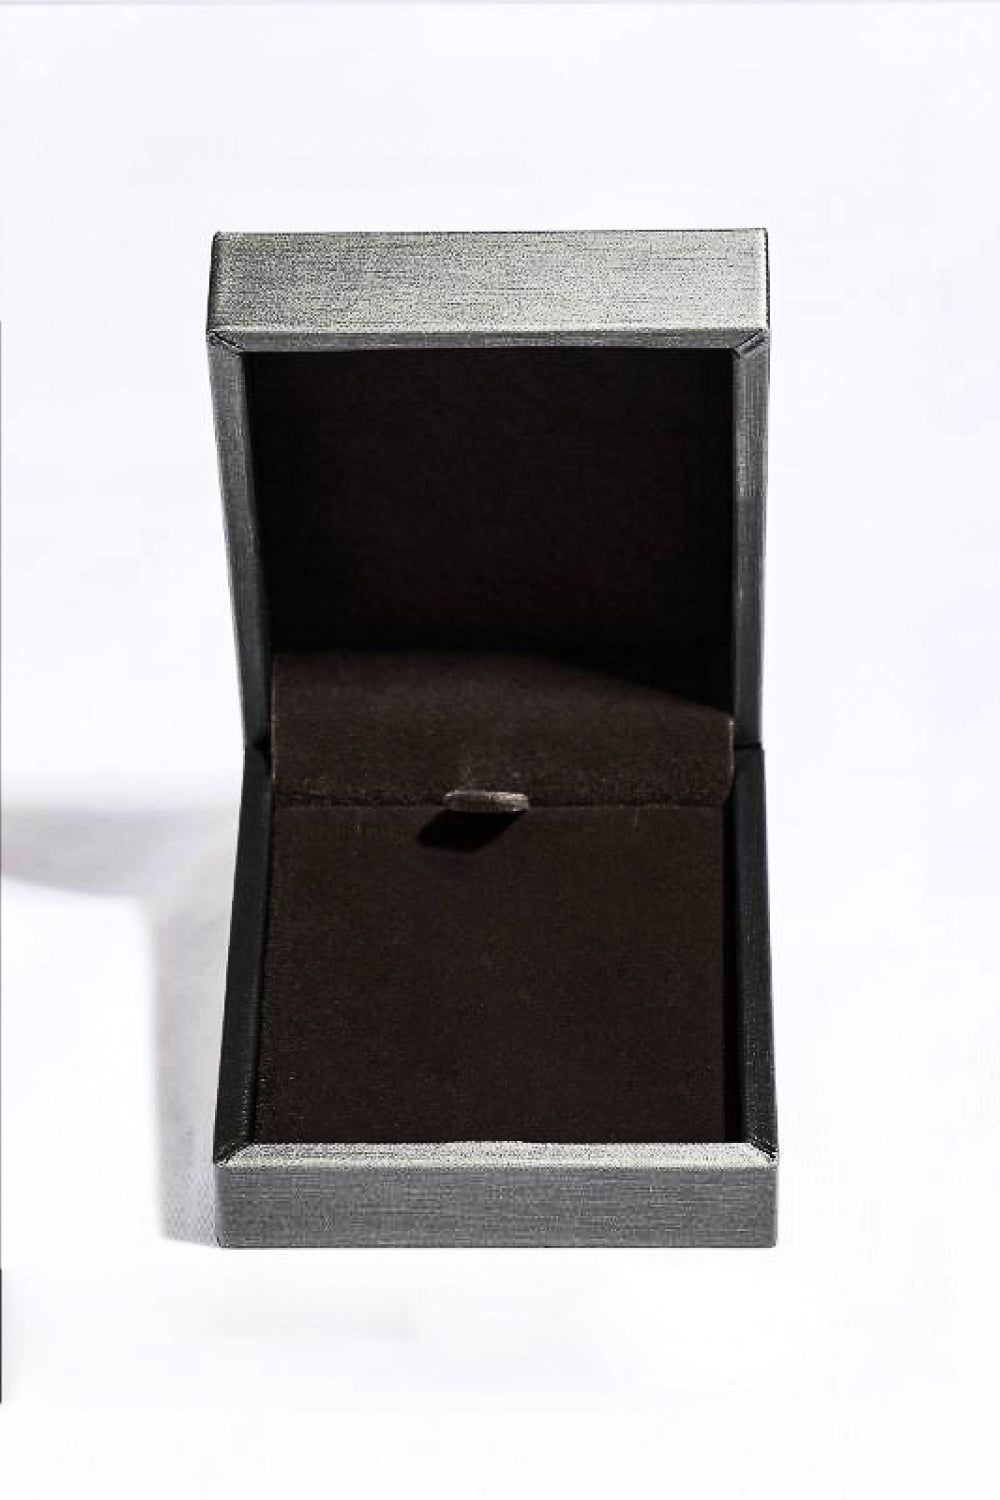 925 Sterling Silver 1 Carat Moissanite Heart Pendant Necklace - bertofonsi